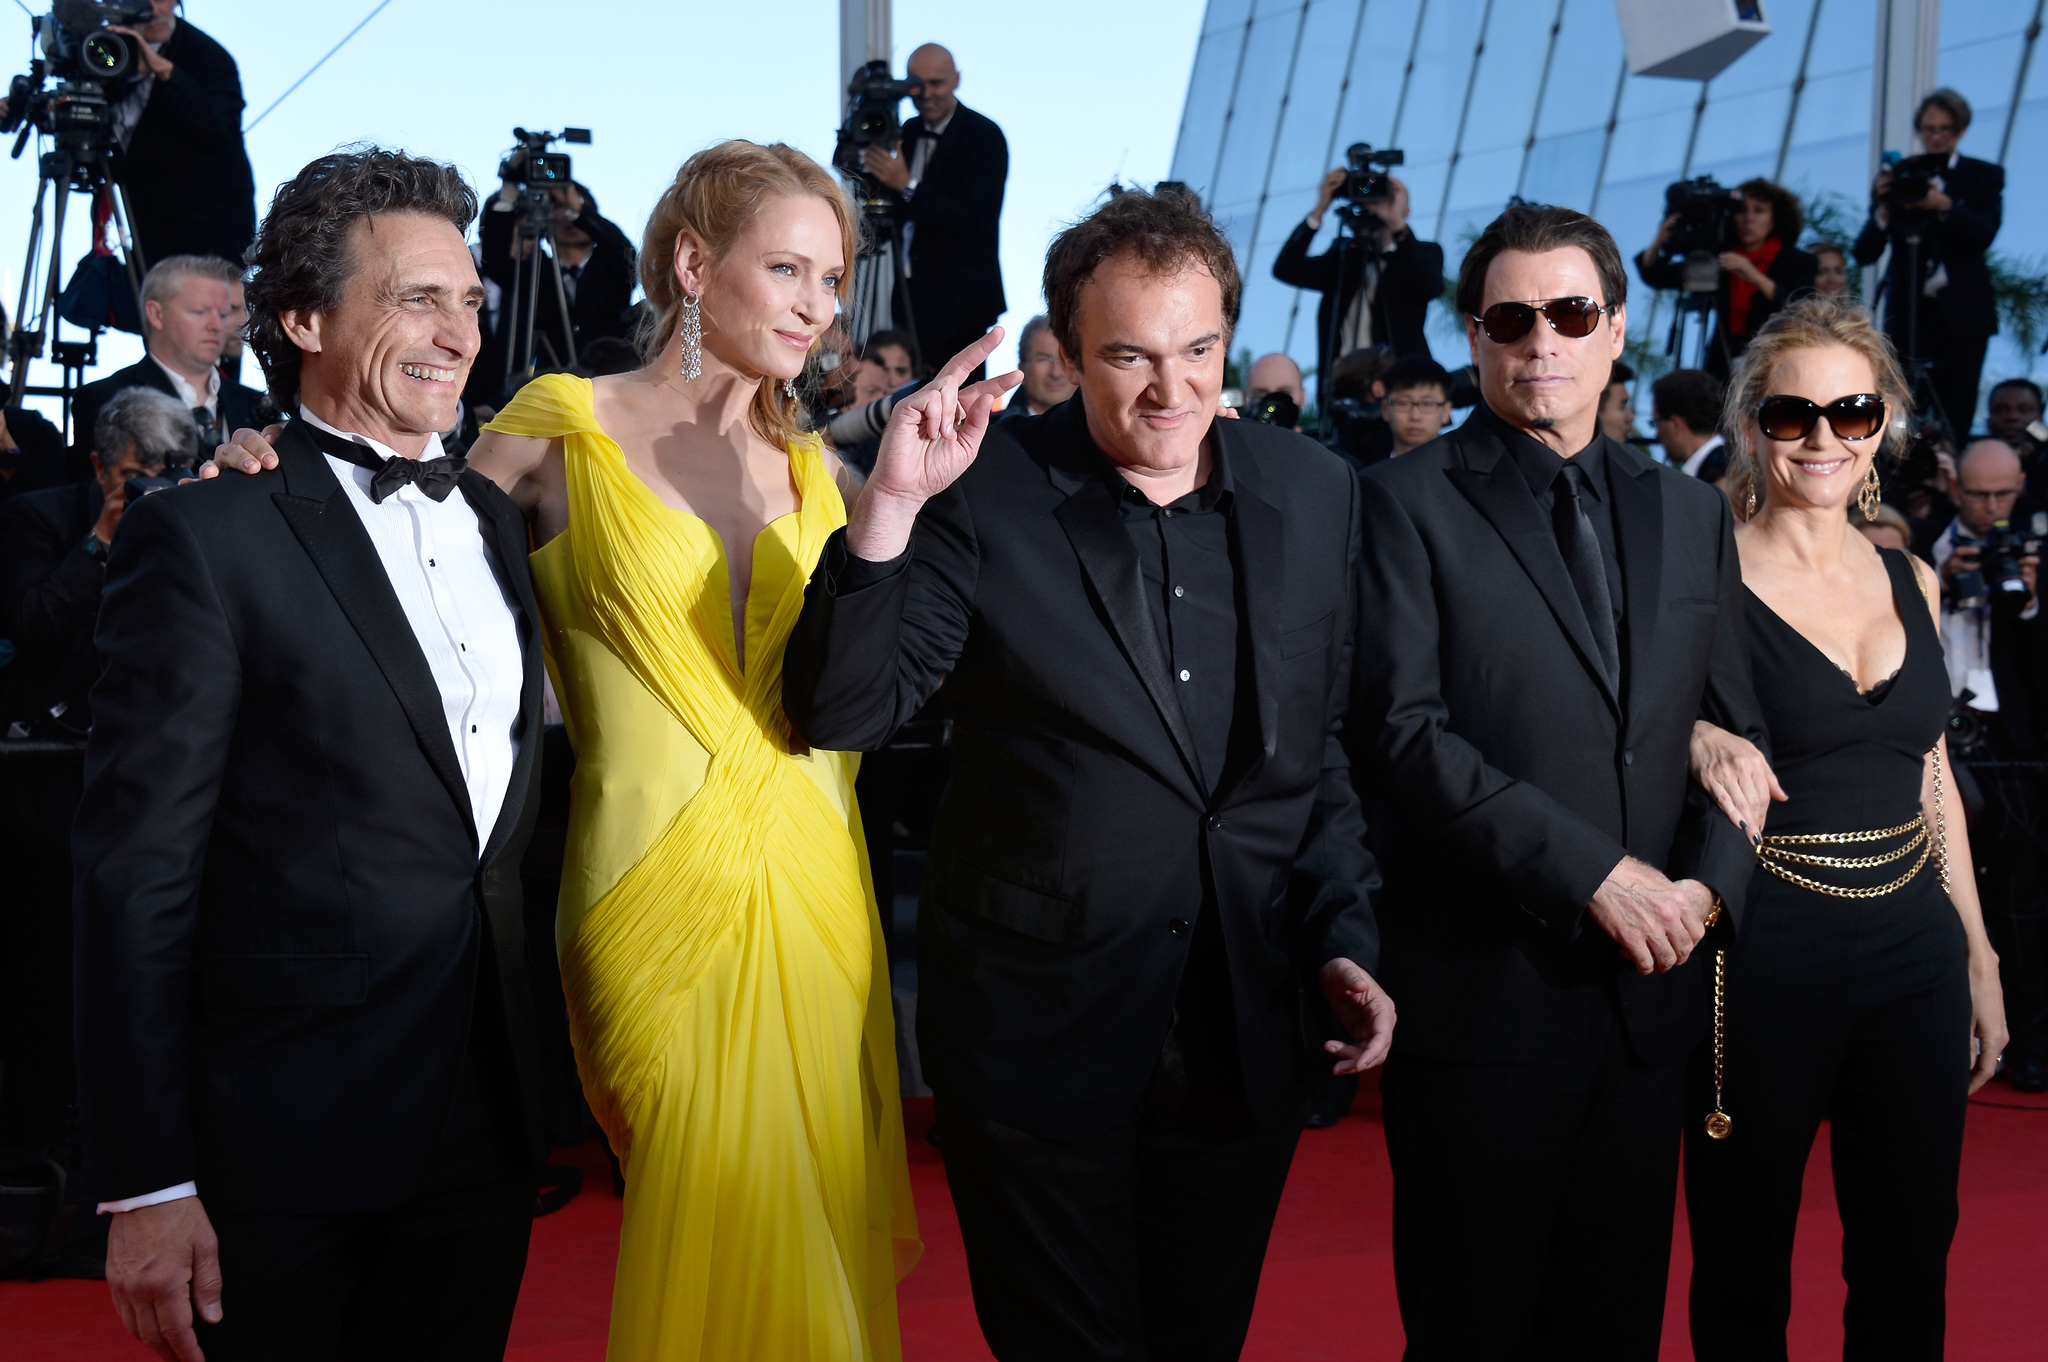 Quentin Tarantino, Uma Thurman, John Travolta, Kelly Preston, and Lawrence Bender at an event for Pulp Fiction (1994)